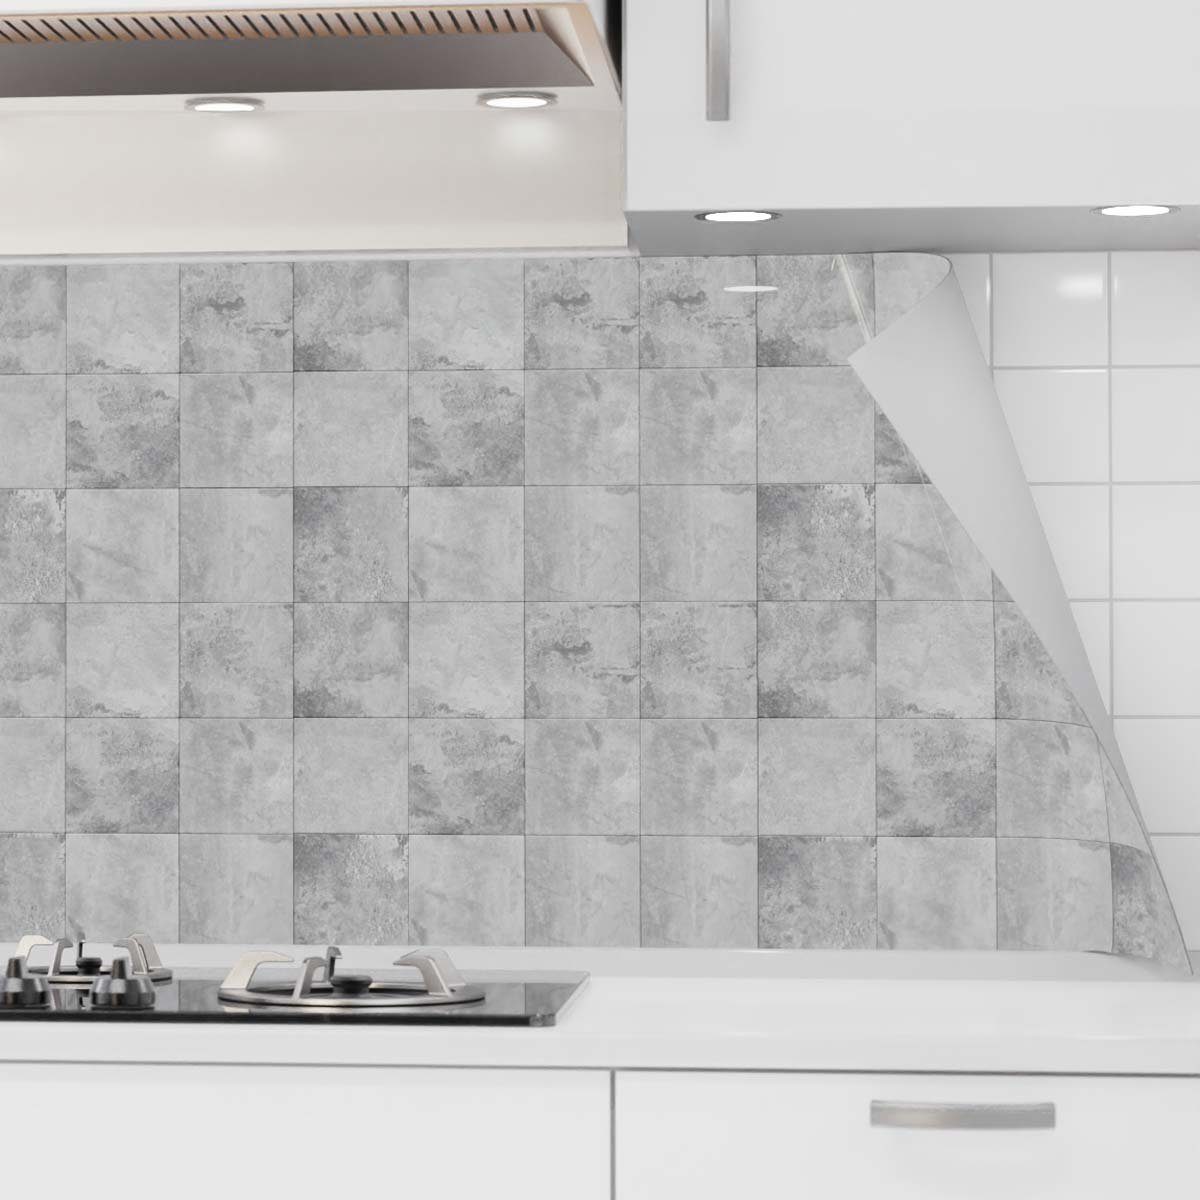 danario Küchenrückwand selbstklebend - Matt - Spritzschutz Küche - versteifte PET Folie Keramikfliesen grau